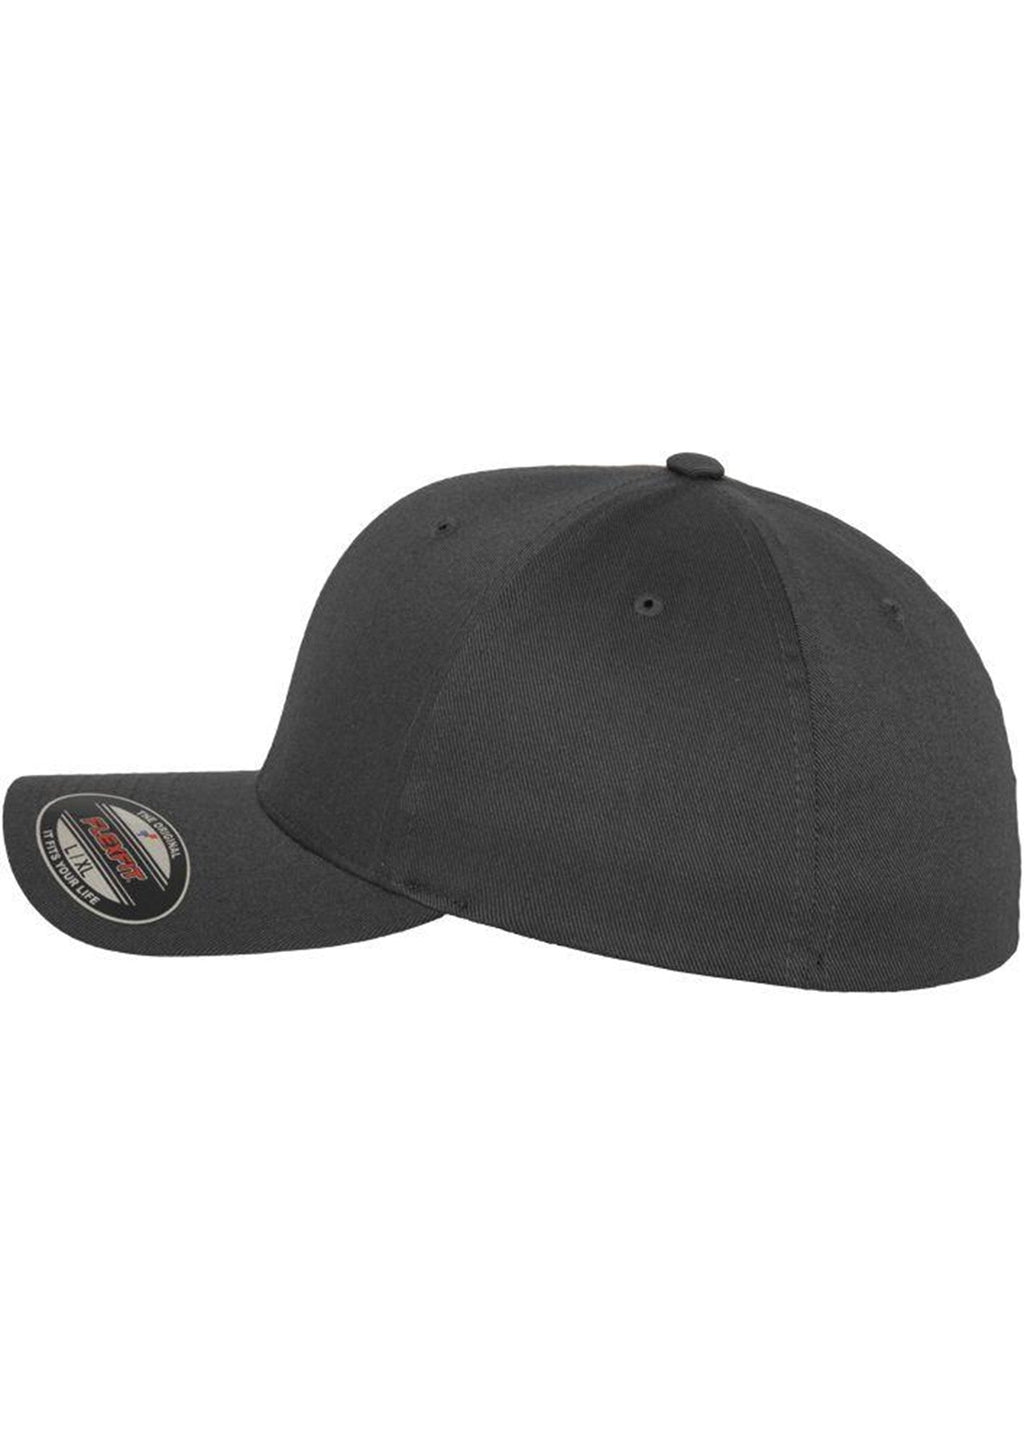 FlexFit Original Baseball Cap - Dark Gray